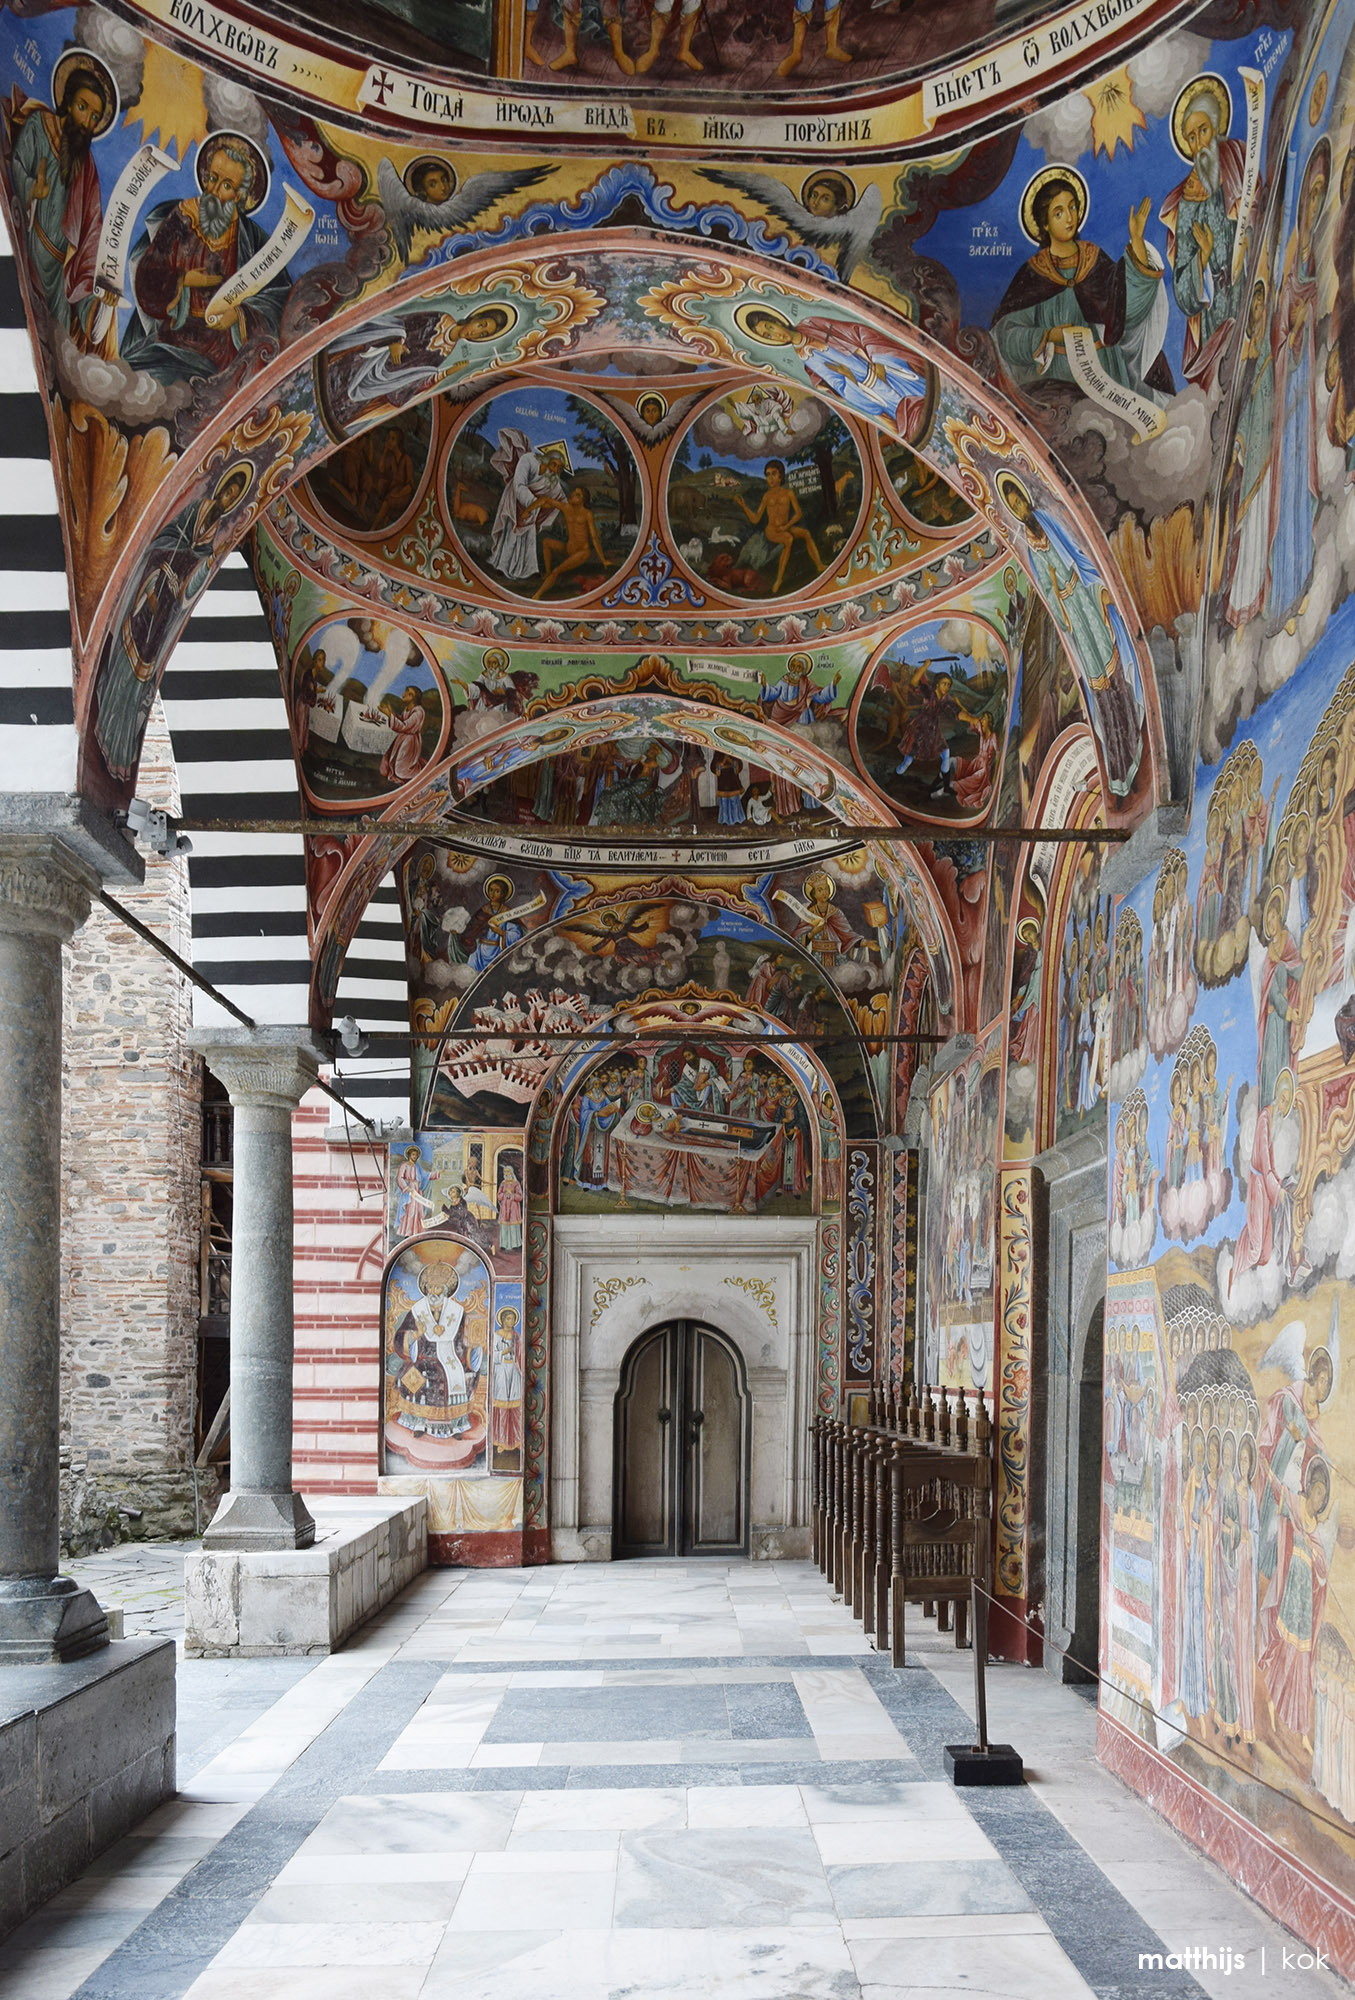 The Colorful Frescoes of Rila Monastery | Photo by Matthijs Kok